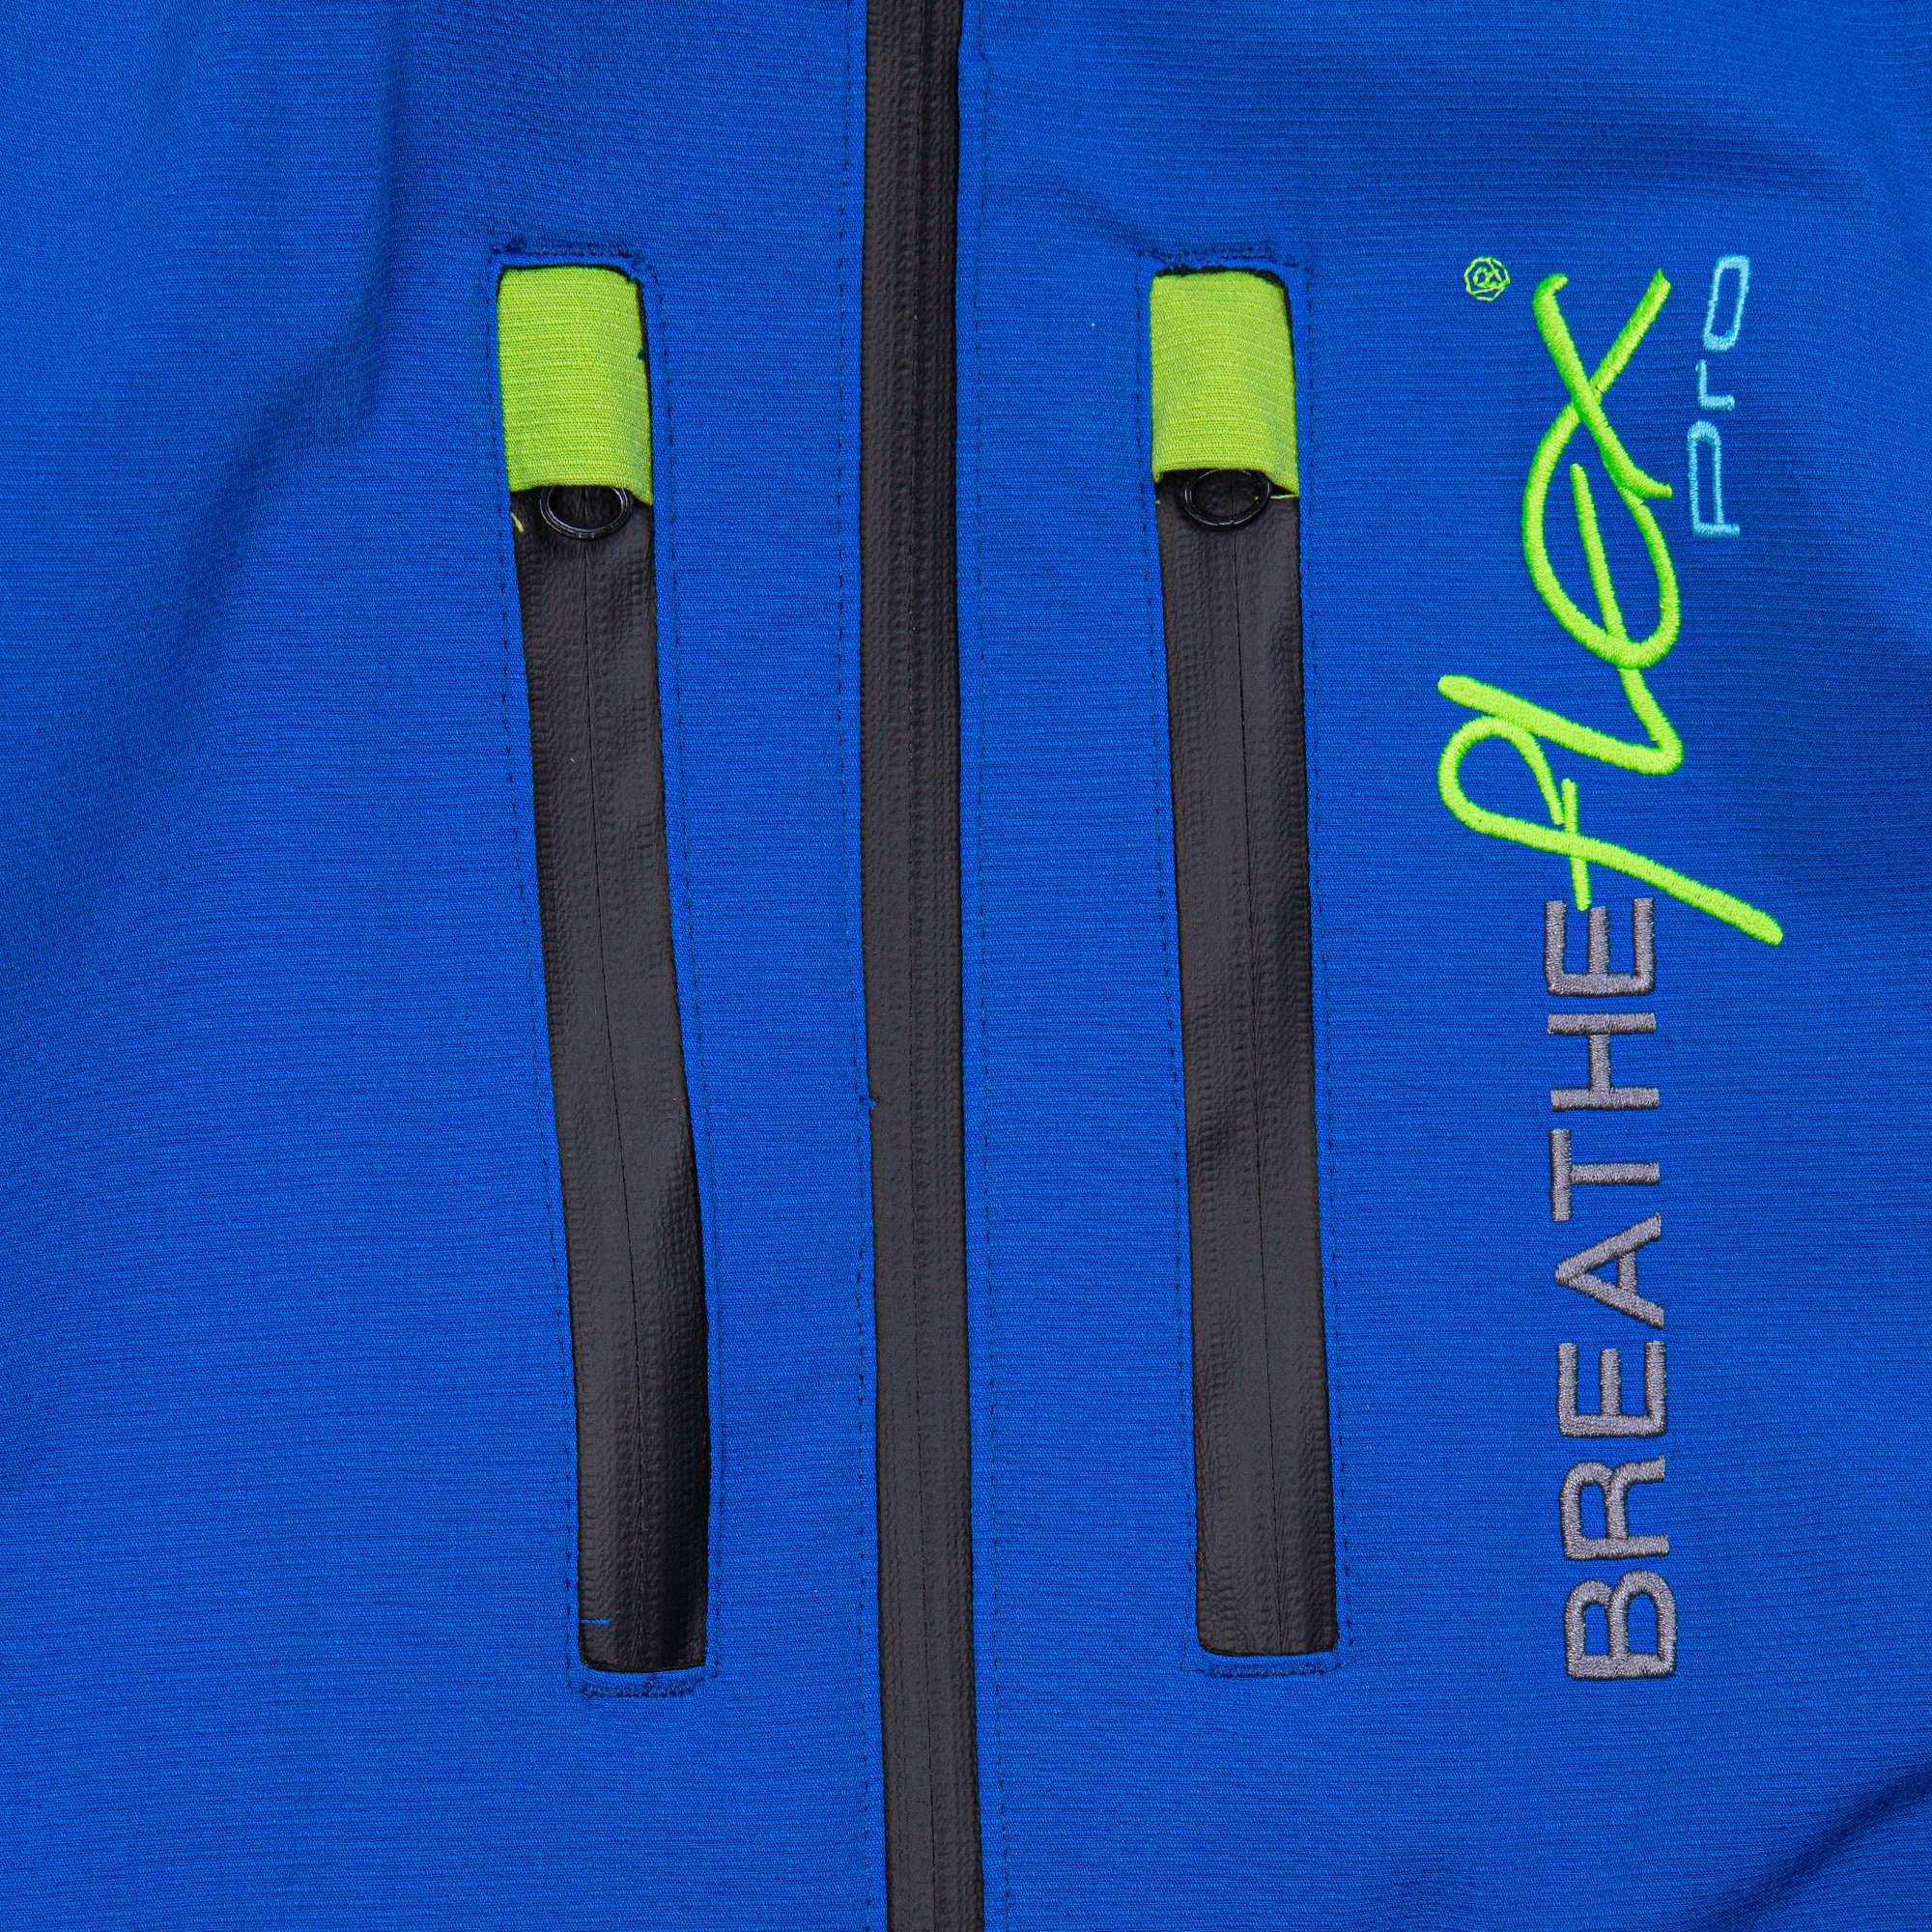 AT4100 Breatheflex Pro Work Jacket - Blue - Arbortec Forestwear